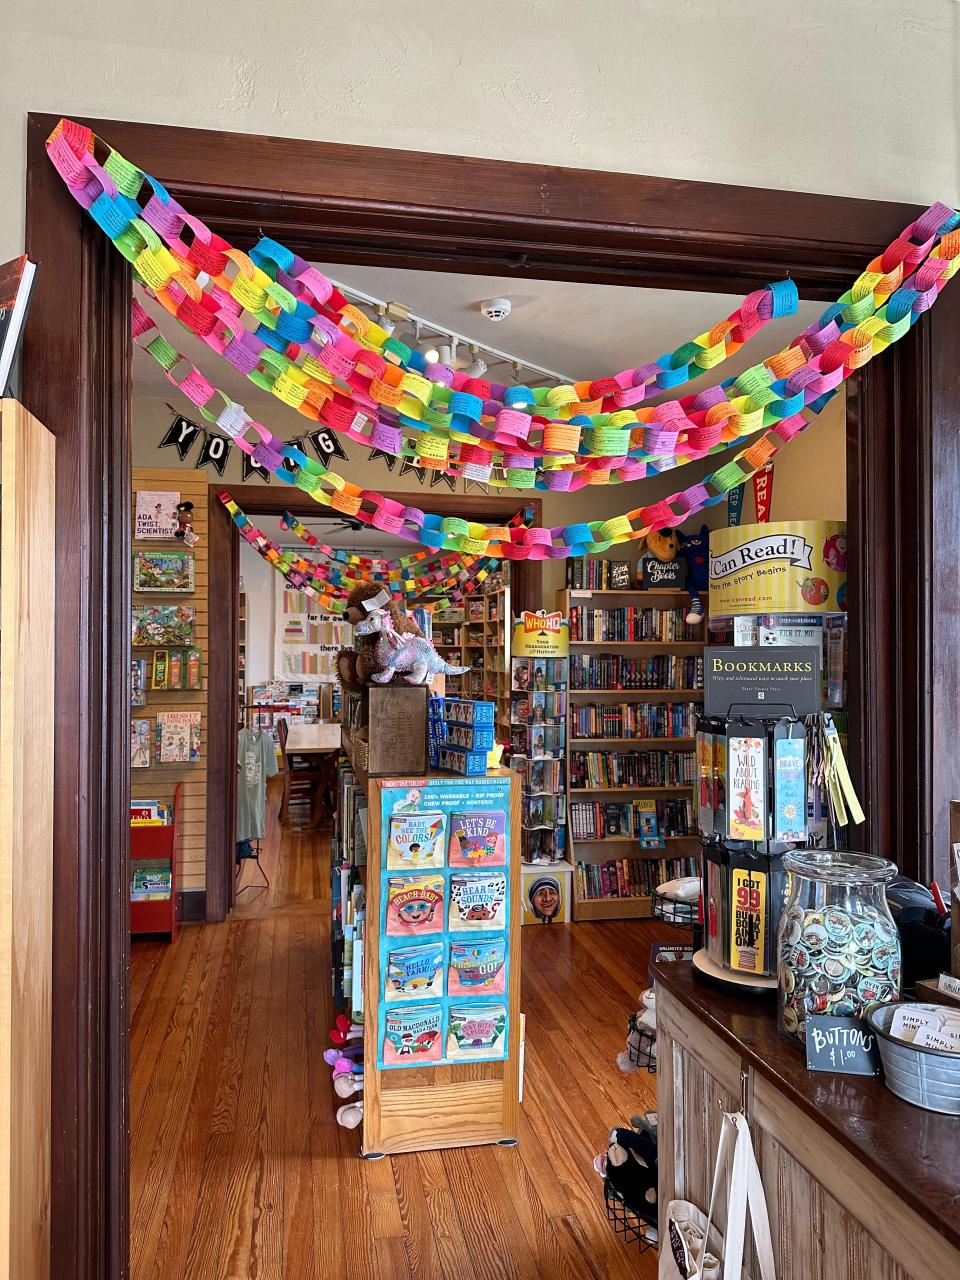 Inside Neighborhood Reads, an independent book store in Missouri.